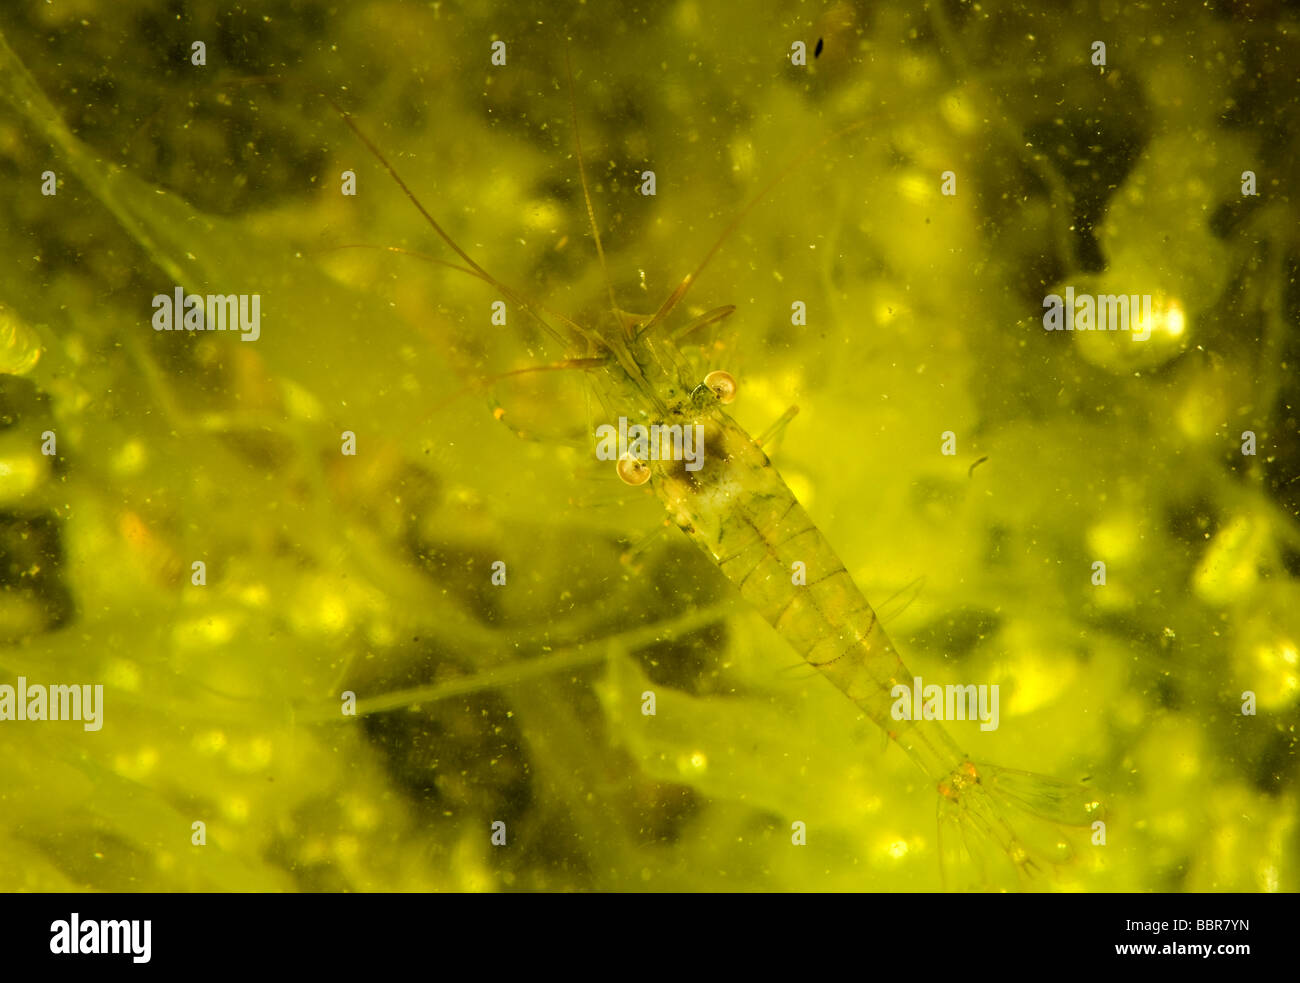 Rock Shrimp amongs green alges, Sweden Stock Photo